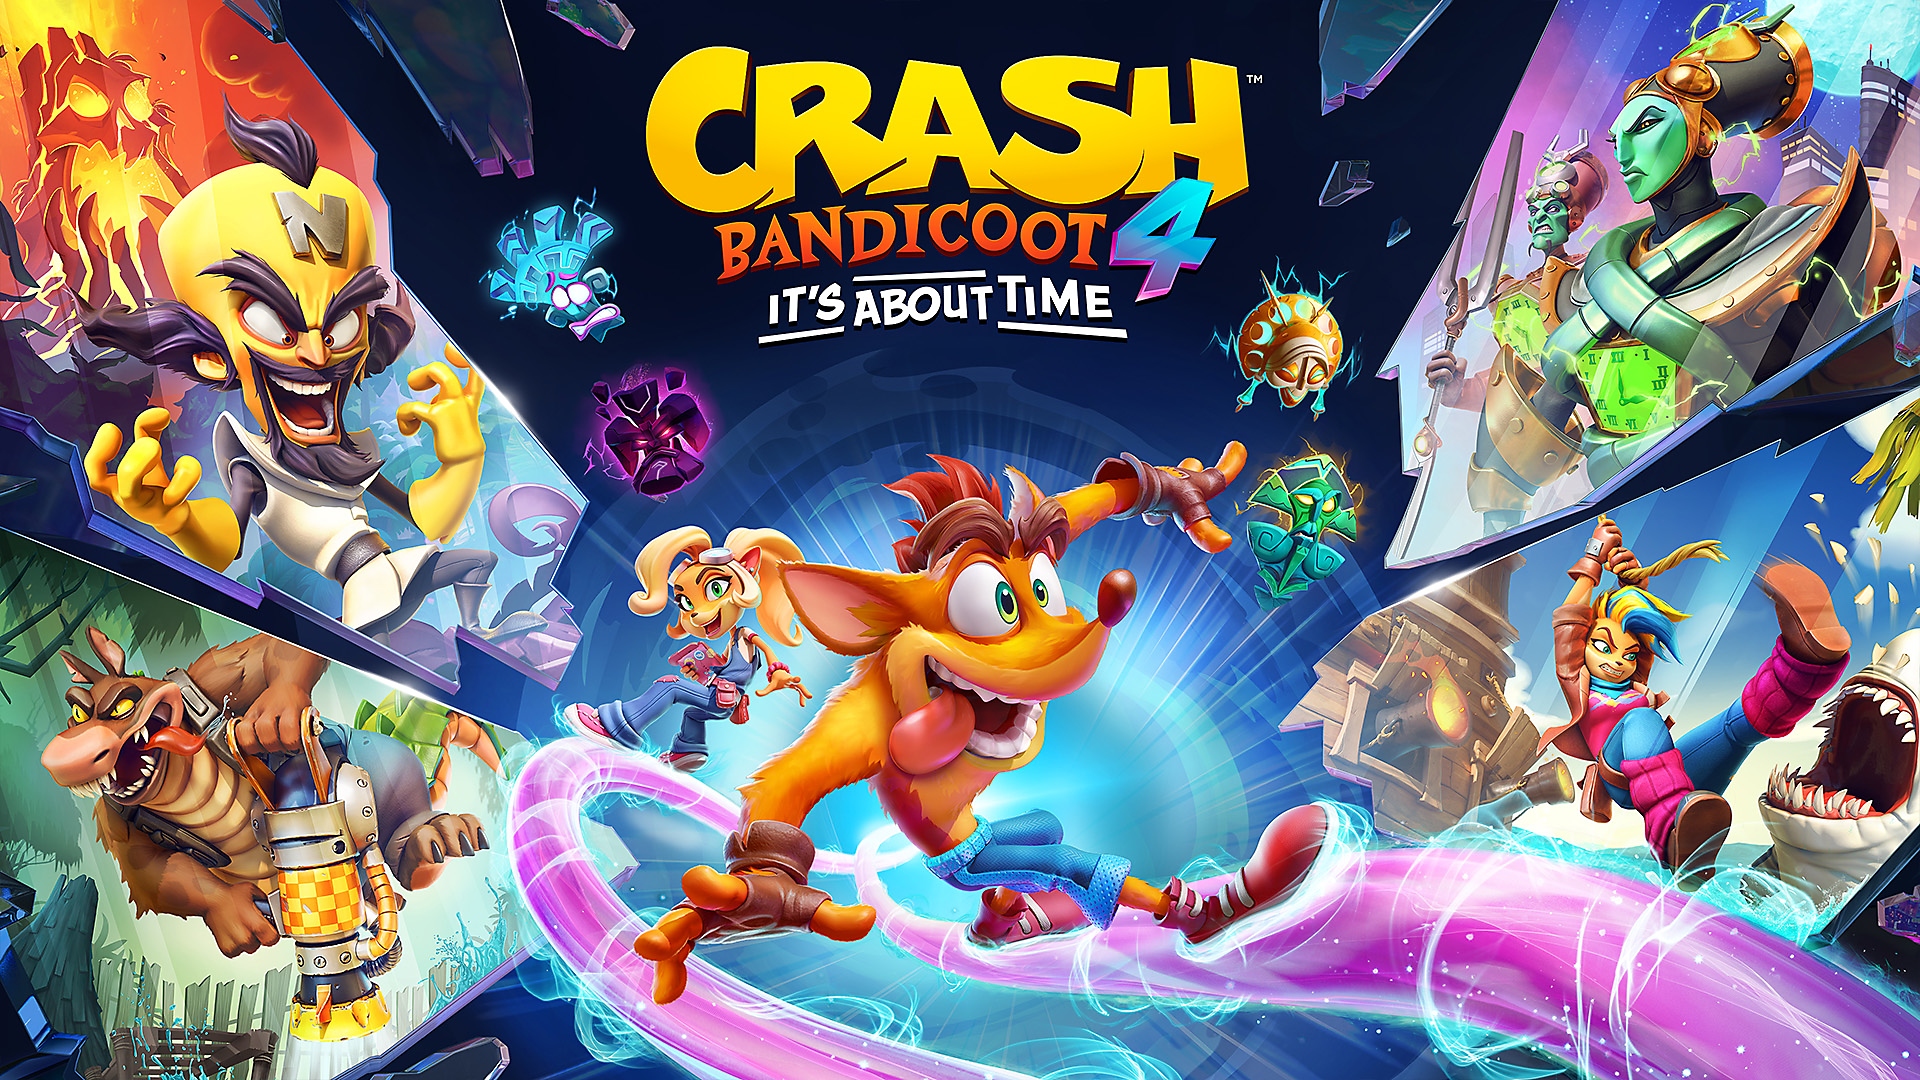 Crash Bandicoot 4: launch trailer